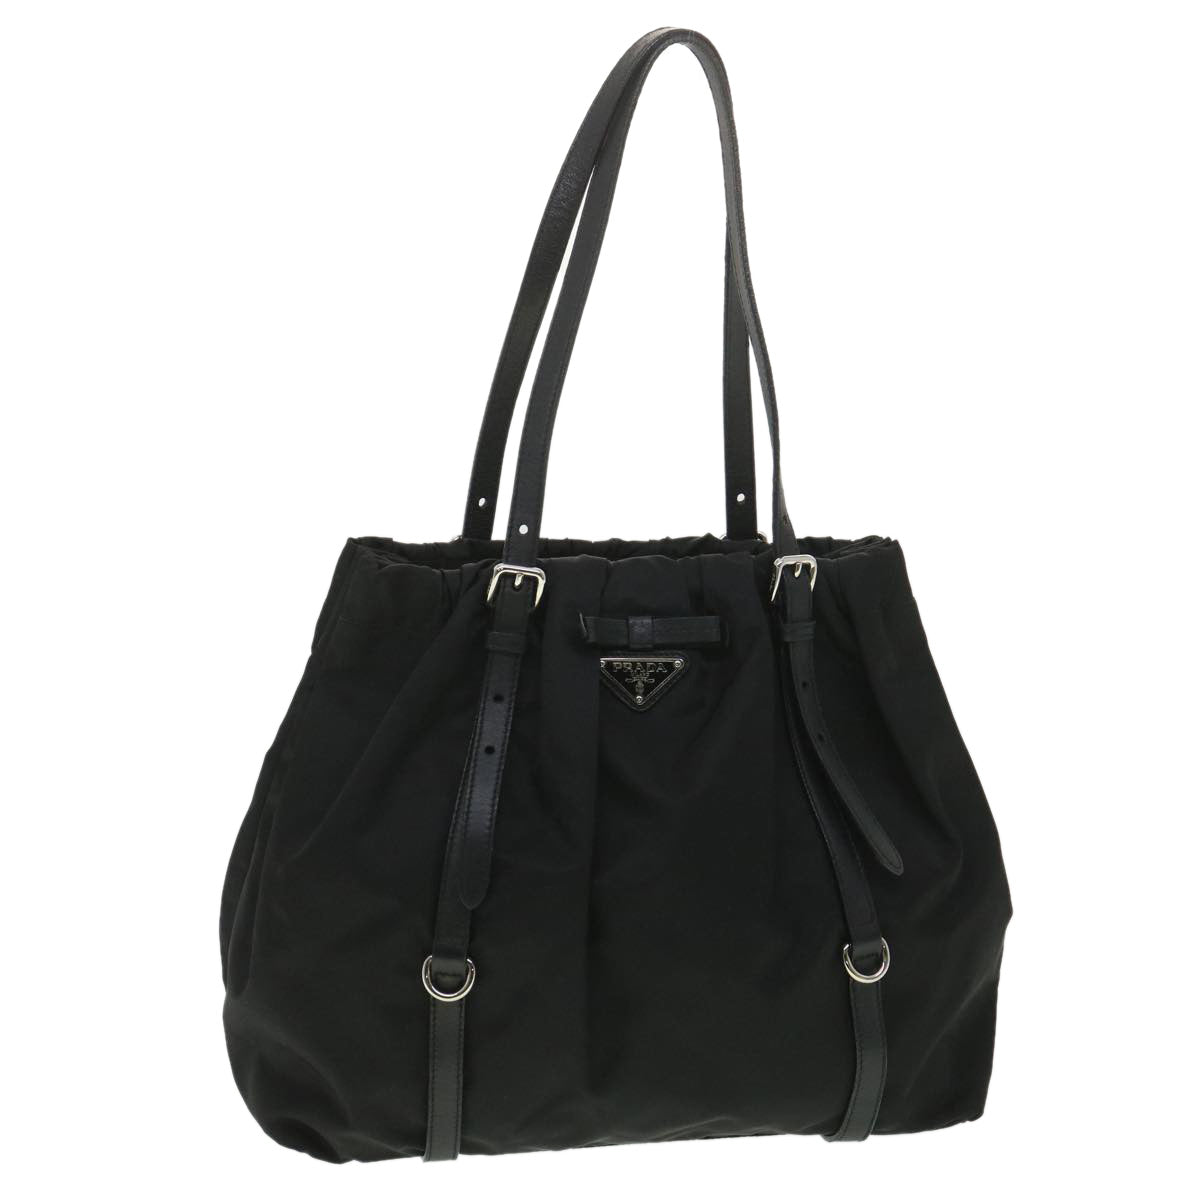 AUThENTIC Black Prada Leather Shoulderbag/Purse Semitracolla Art no. BR2375  | Prada leather, Leather, Purses